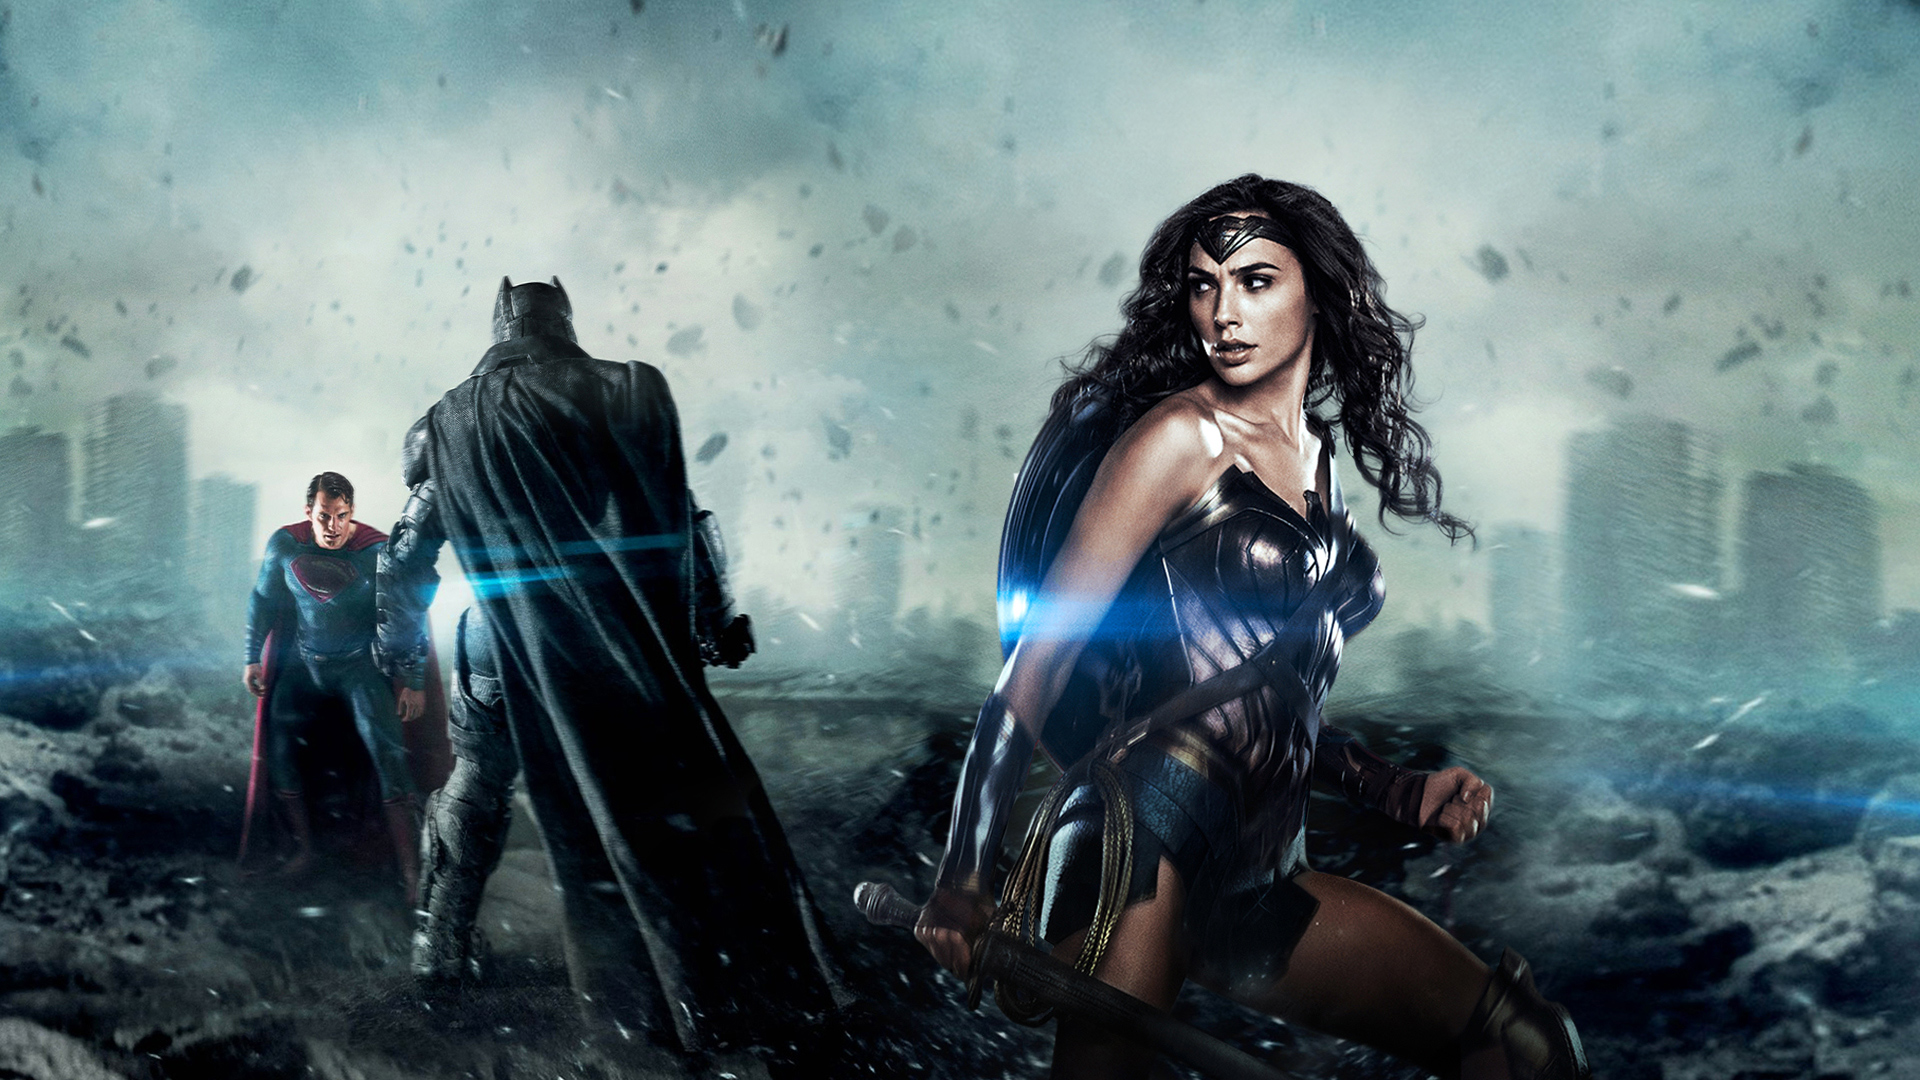 380305 скачать обои кино, бэтмен против супермена: на заре справедливости, бэтмен, галь гадот, супермен, чудо женщина - заставки и картинки бесплатно